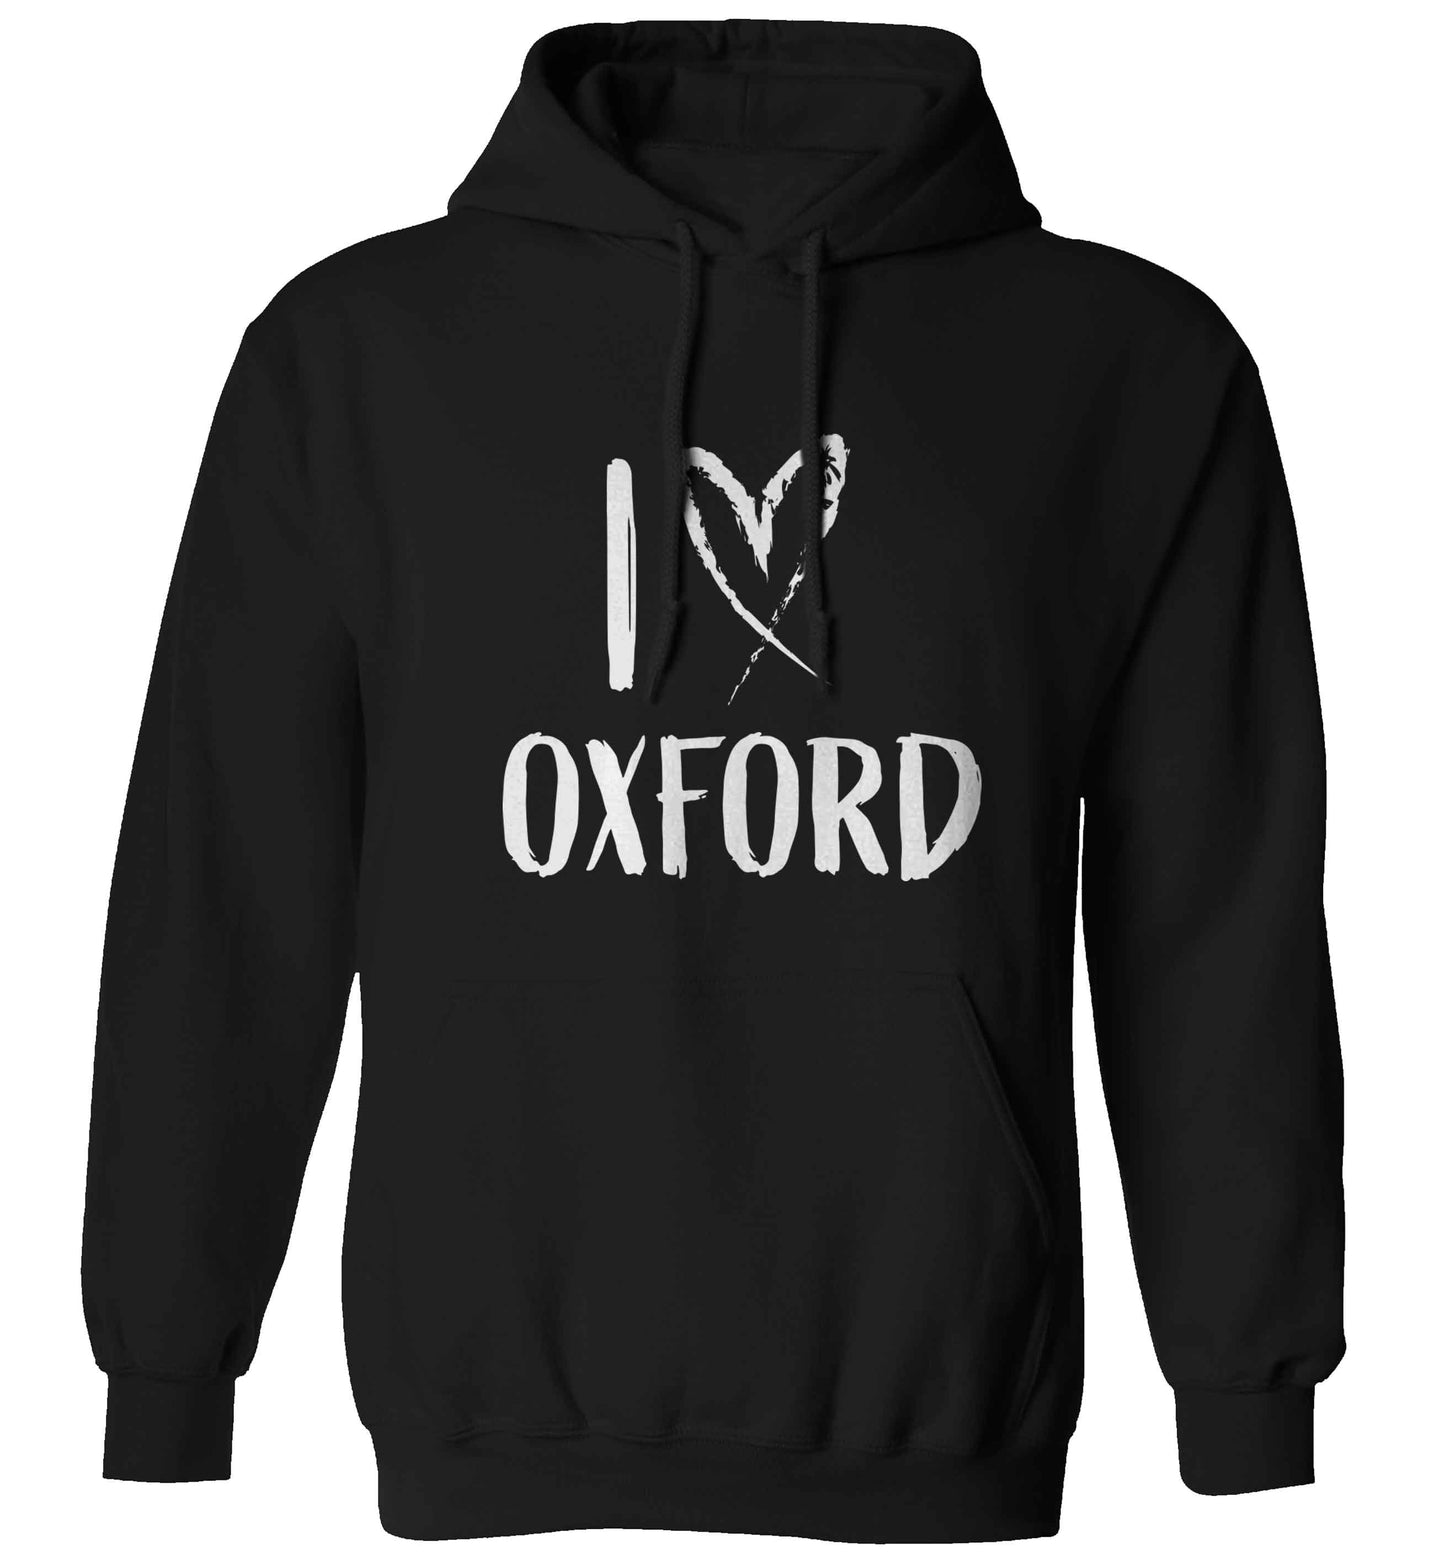 I love Oxford adults unisex black hoodie 2XL